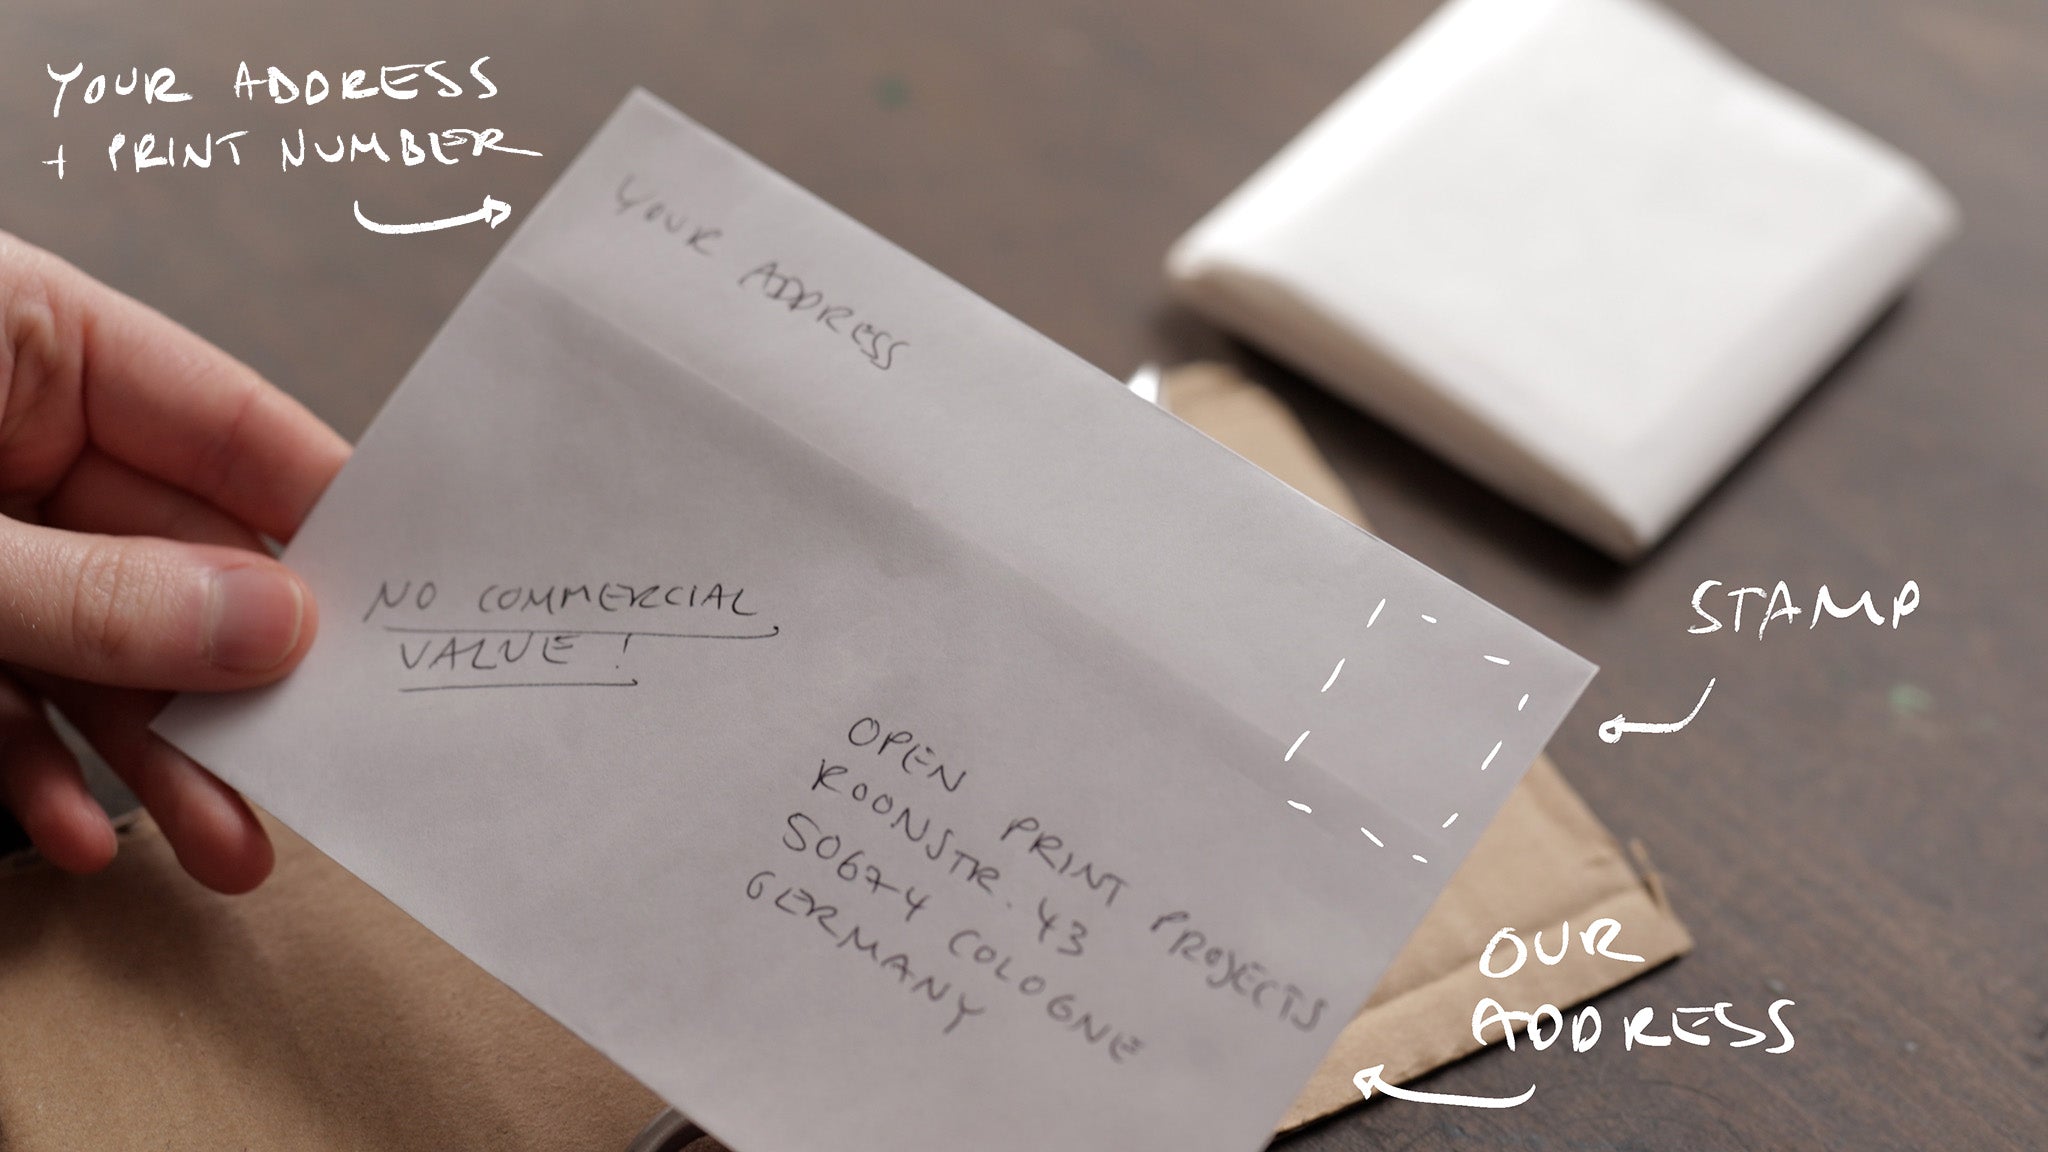 Use a regular envelope as letter